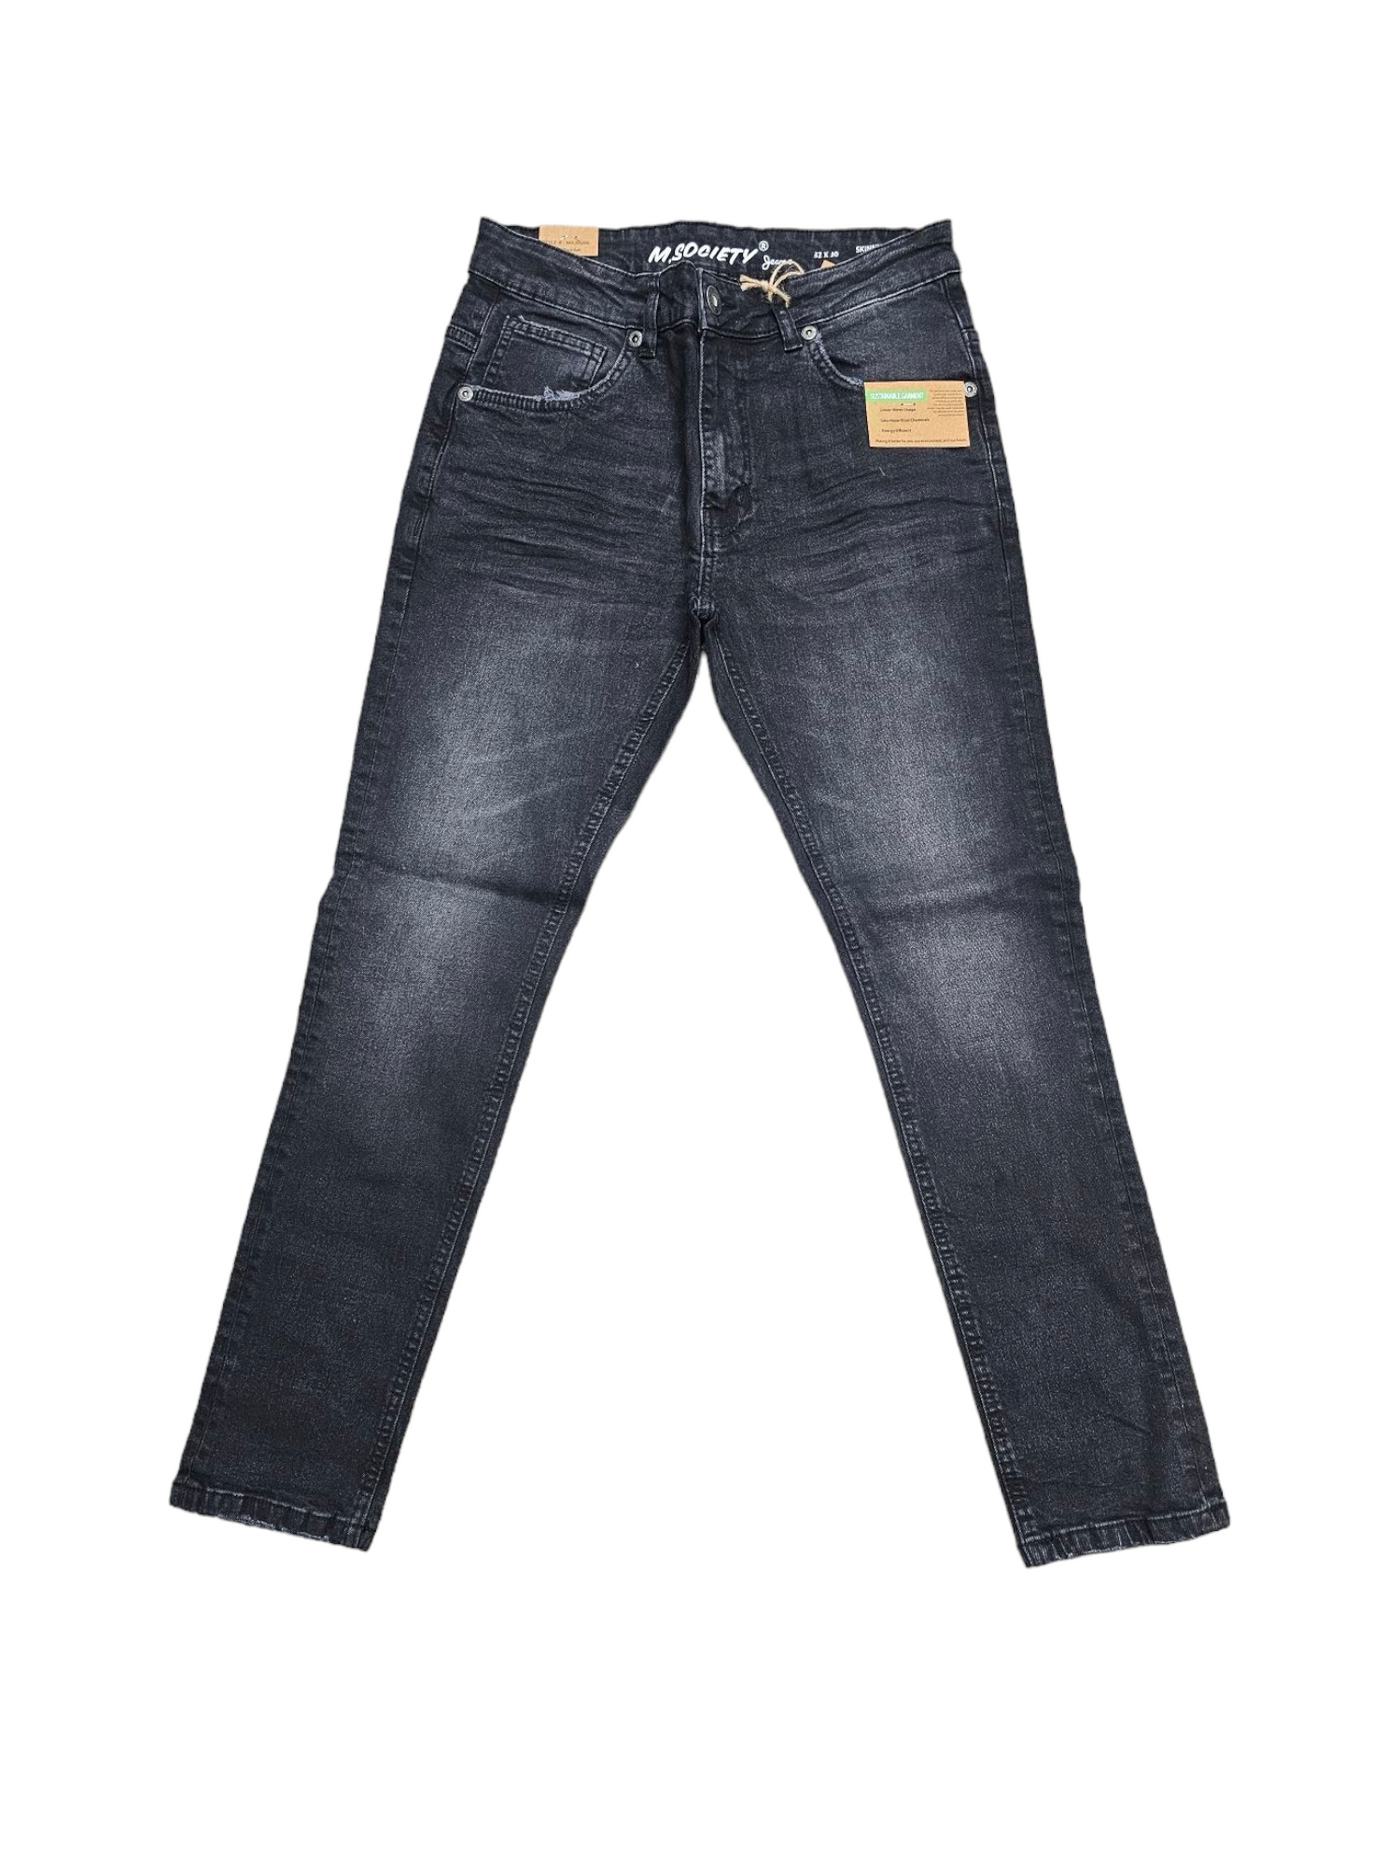 M. Society Men's Stretched Denim Jeans Black MS-80260